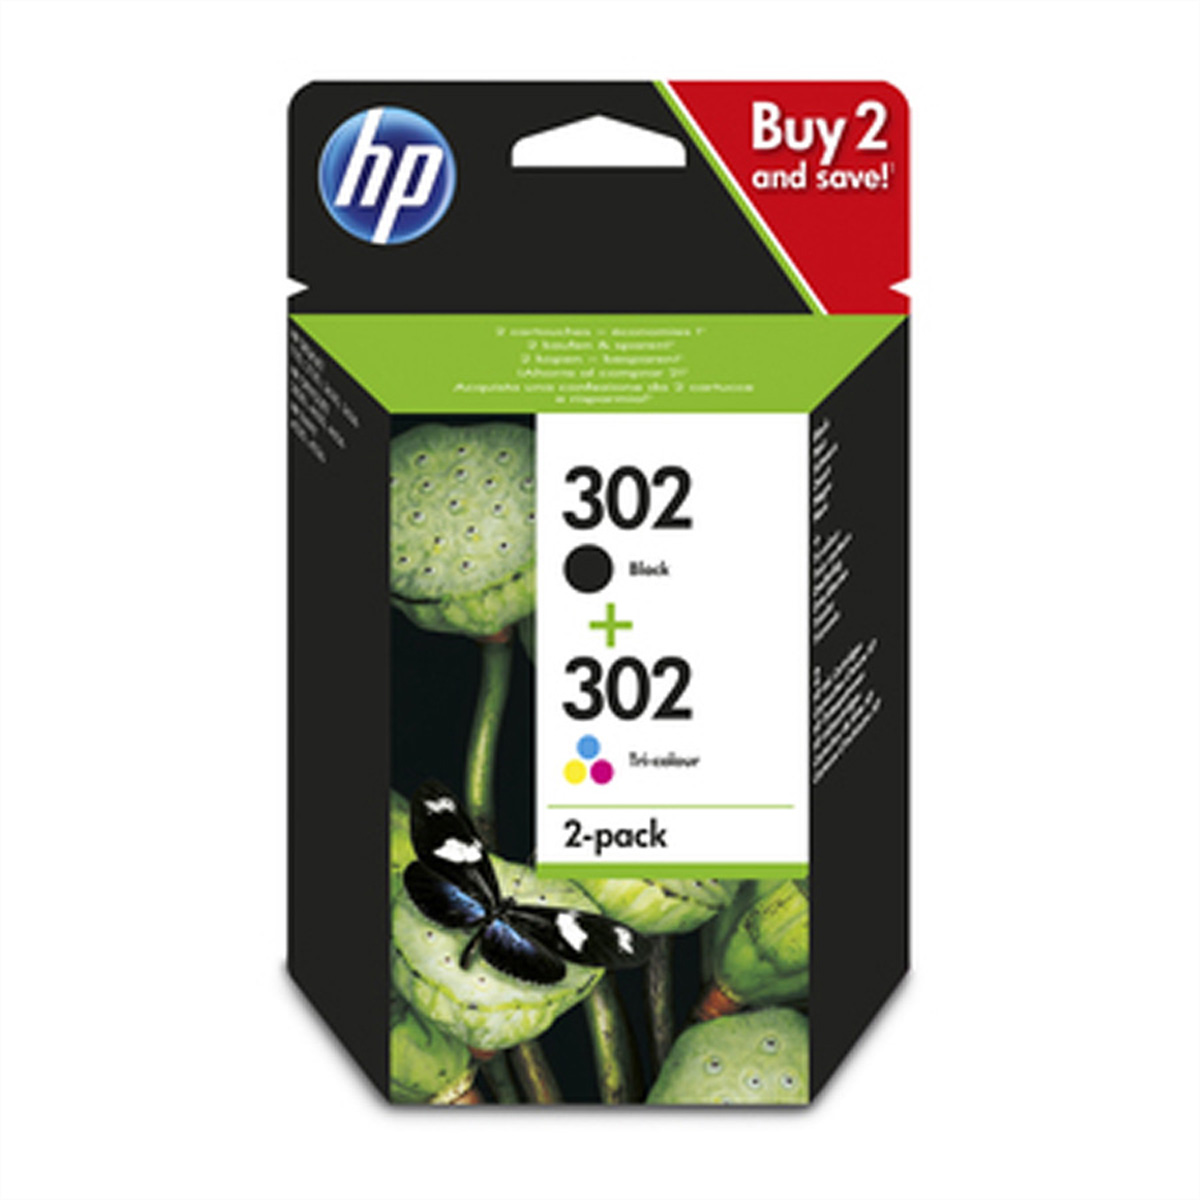 X4D37AE, Kombipack 302/302 schwarz/color für HP OfficeJet 3830